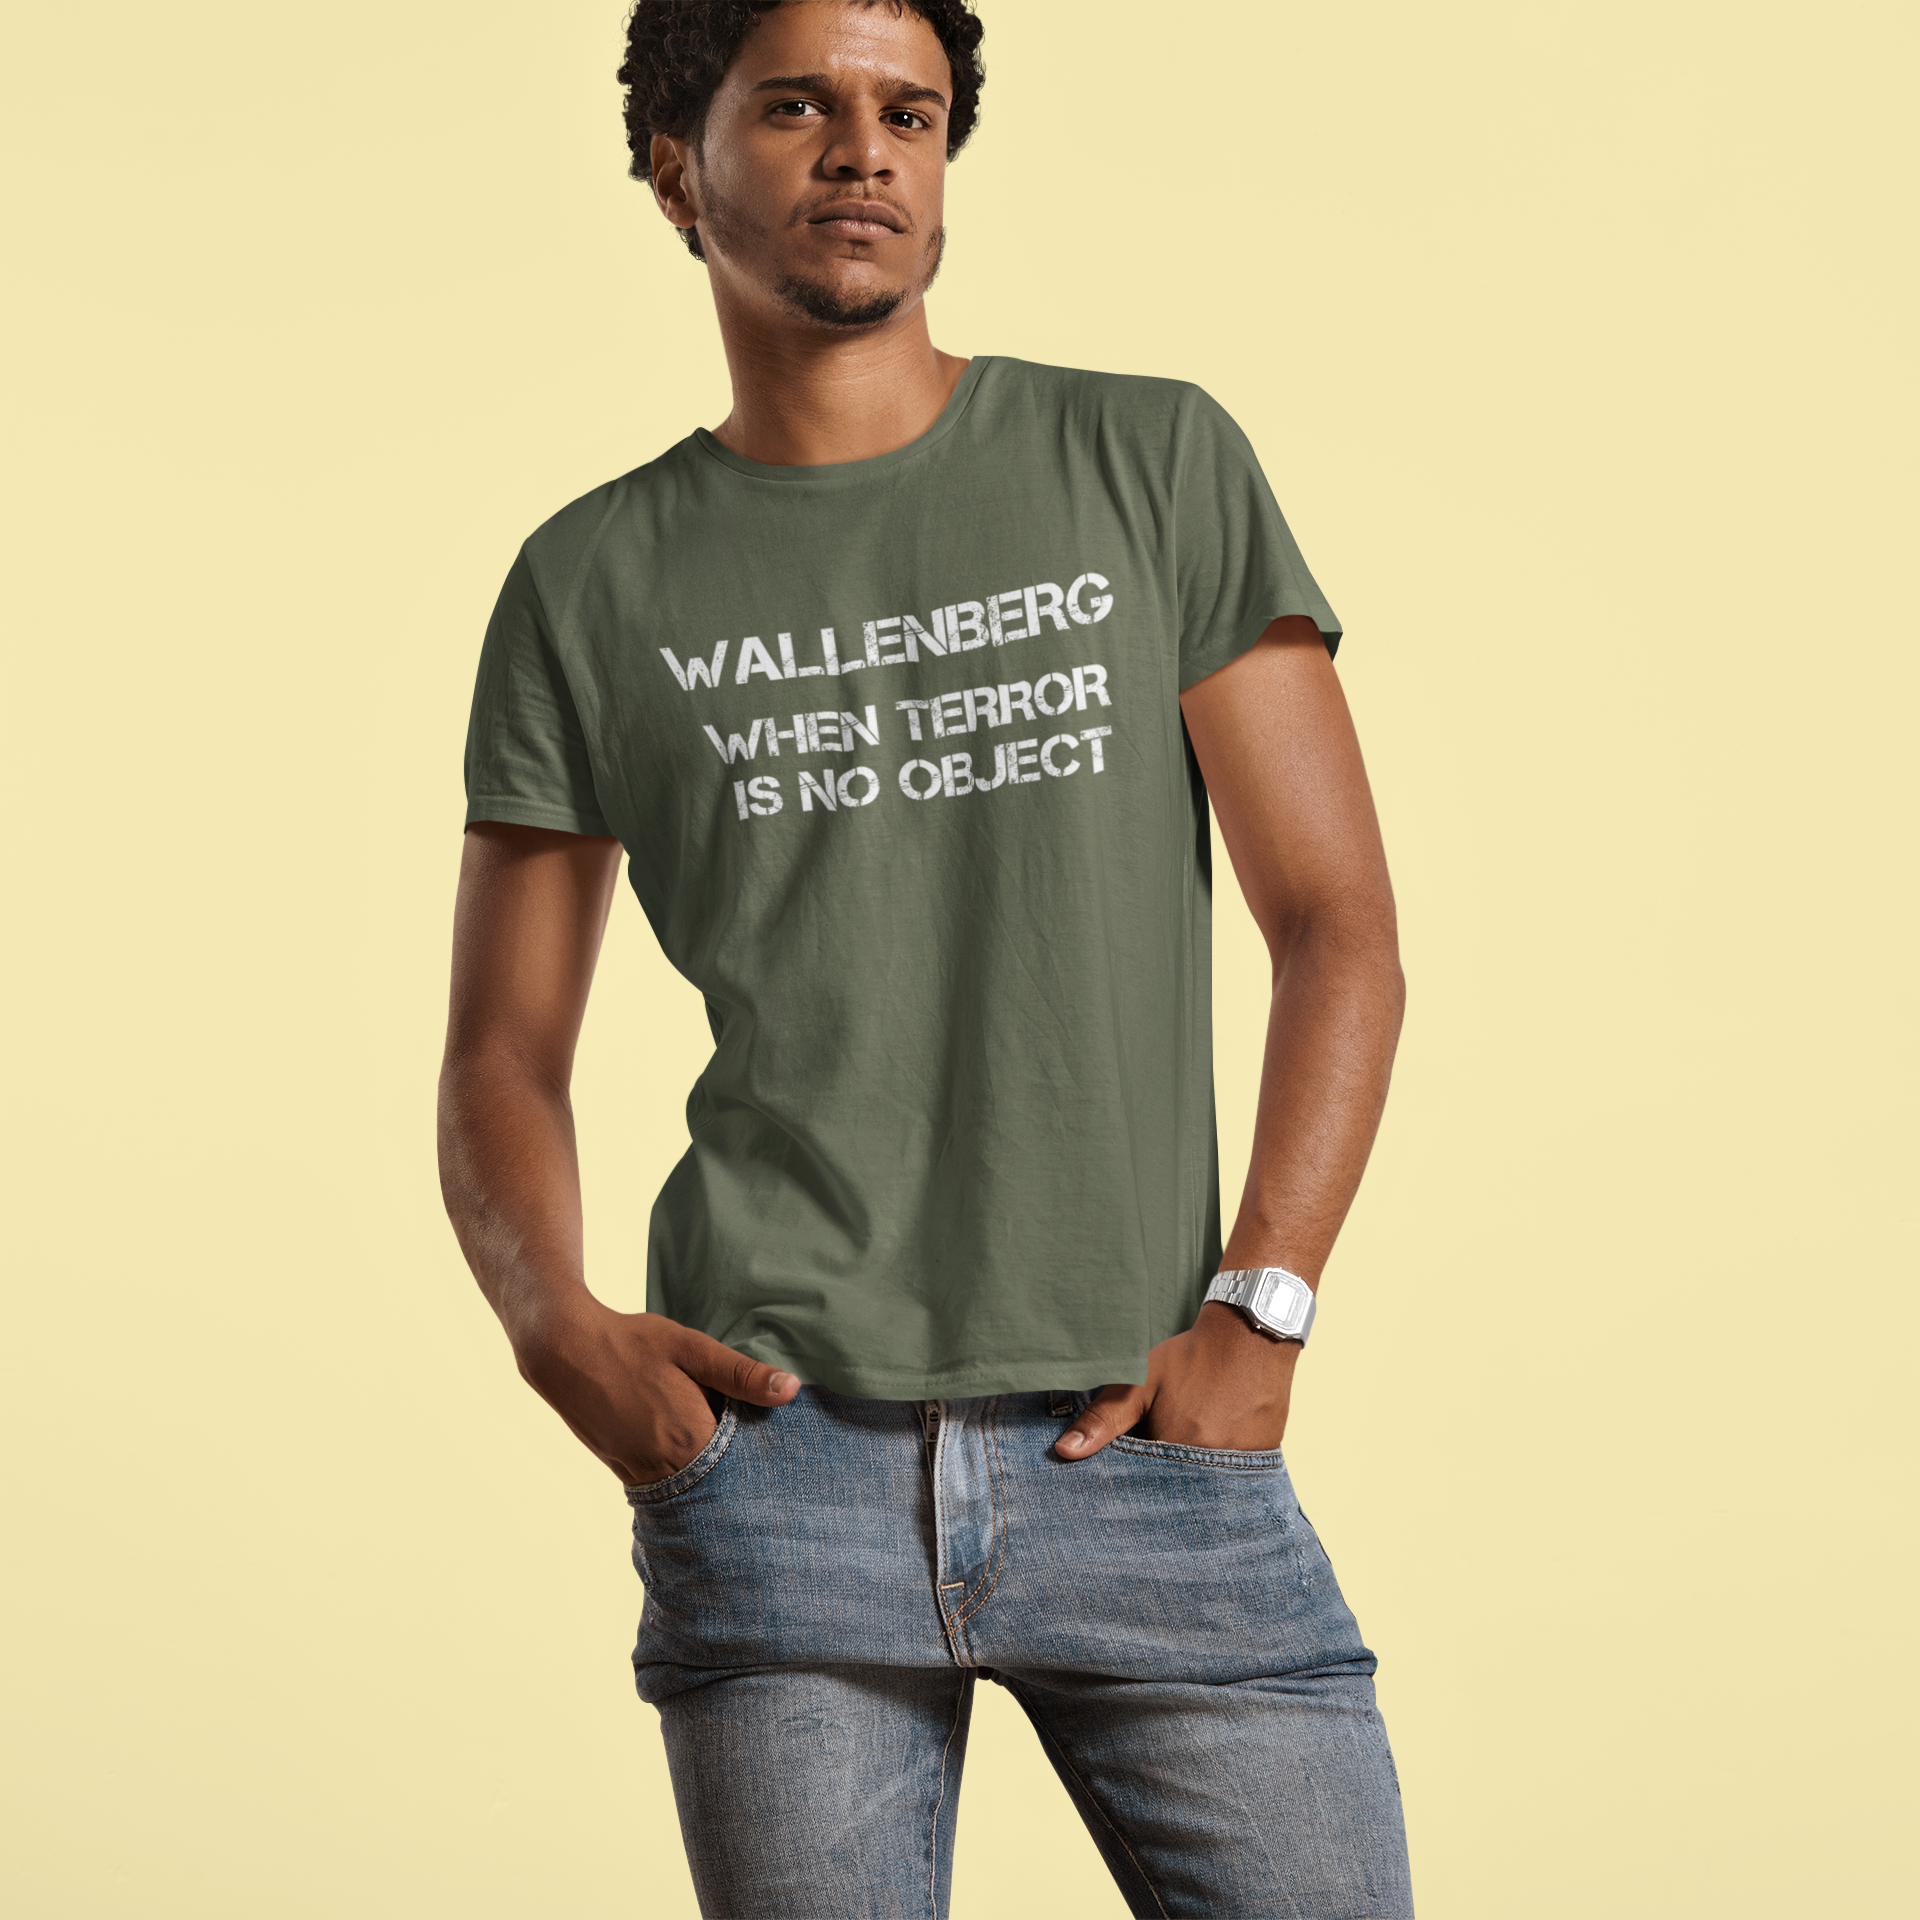 T-Shirt Men Fit. Text på Tshirt, Wallenberg When Terror Is No Object